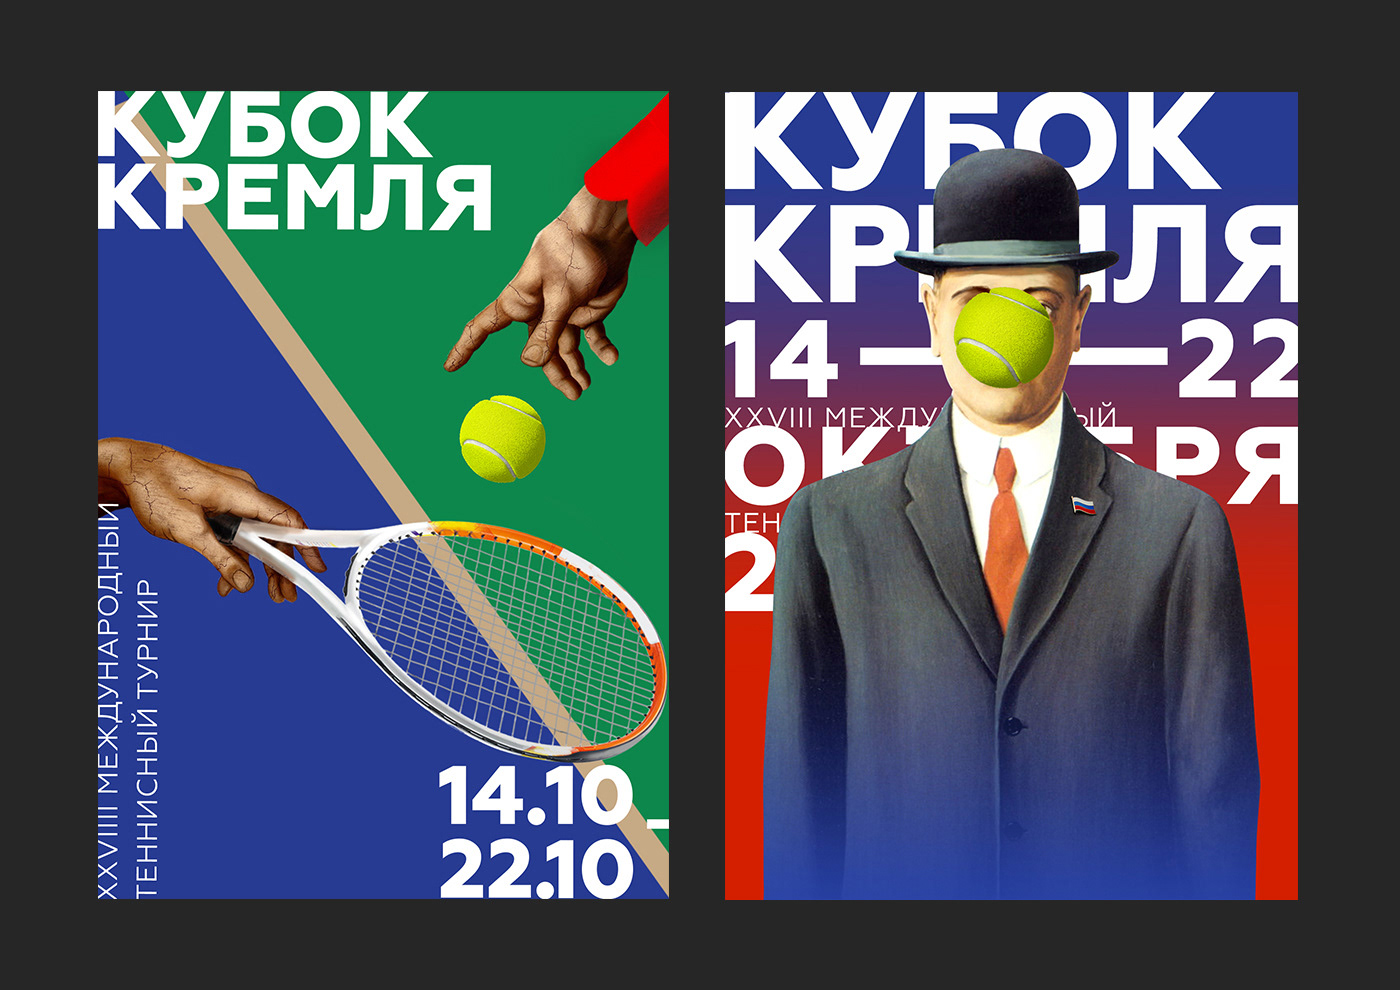 Kremlin Cup posters on Behance